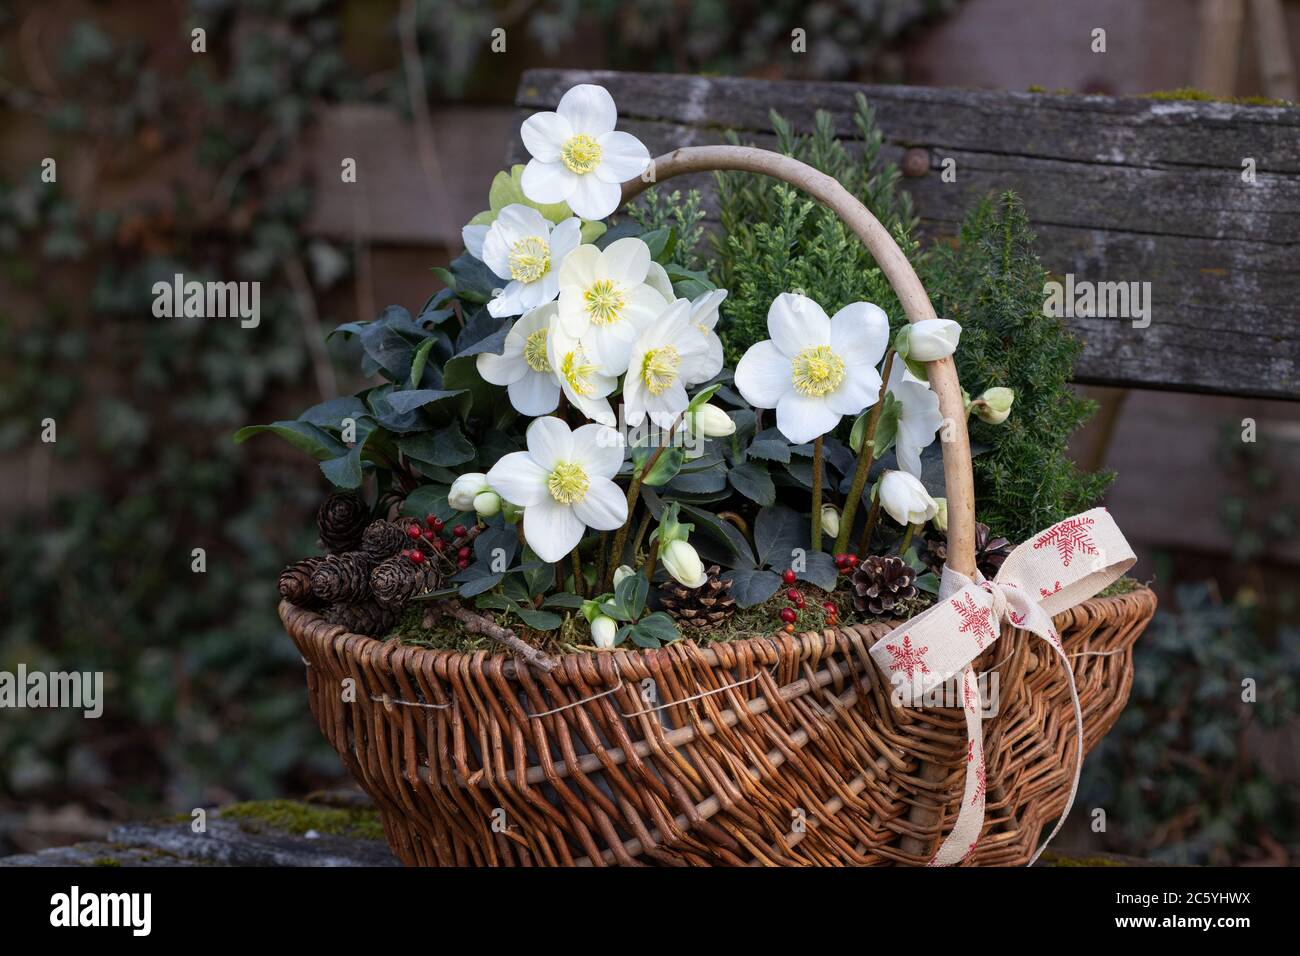 helleborus niger in basket as winter garden decoration Stock Photo